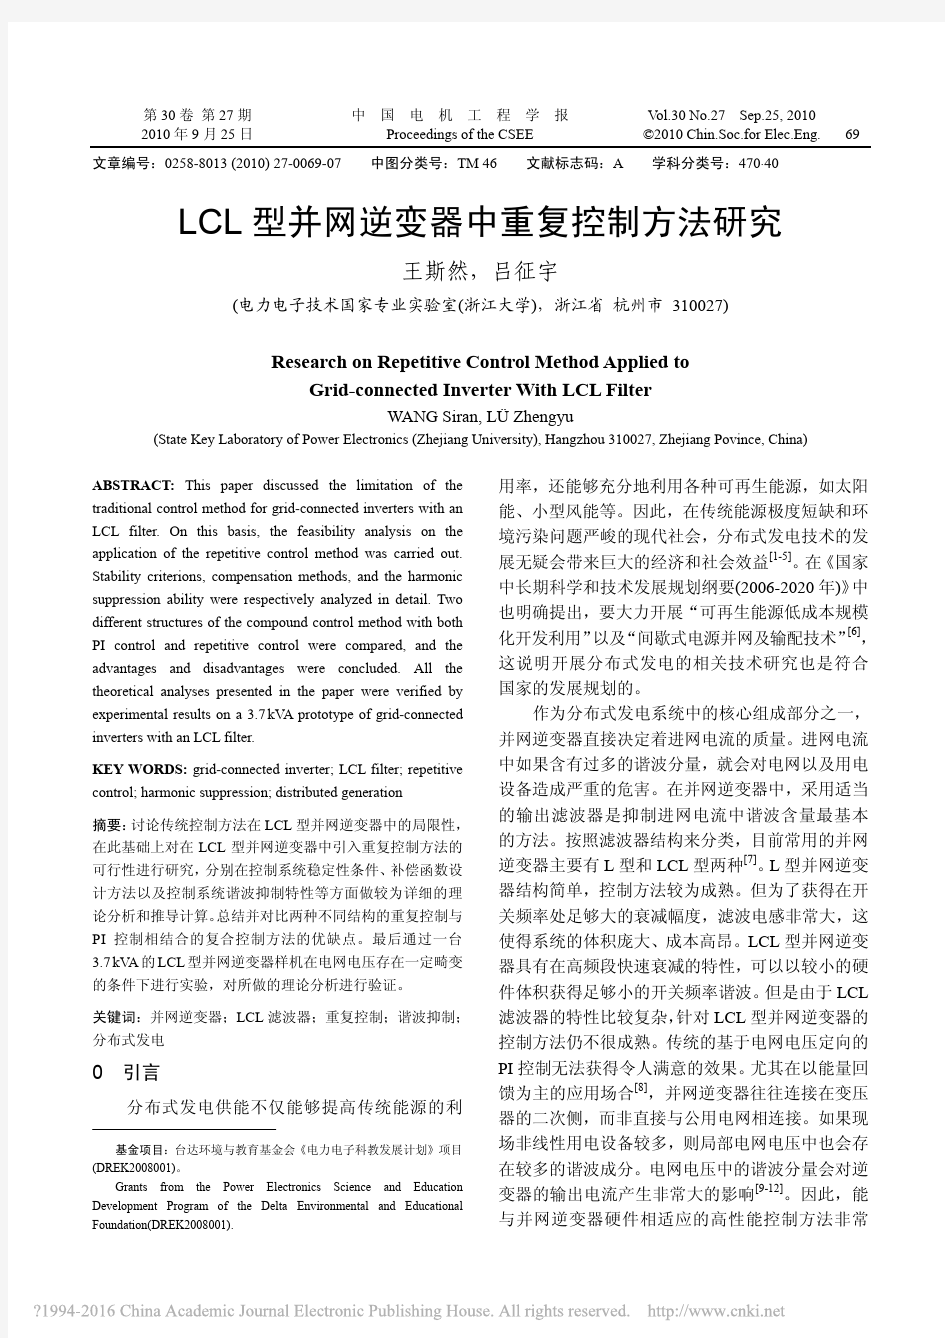 LCL型并网逆变器中重复控制方法研究_王斯然